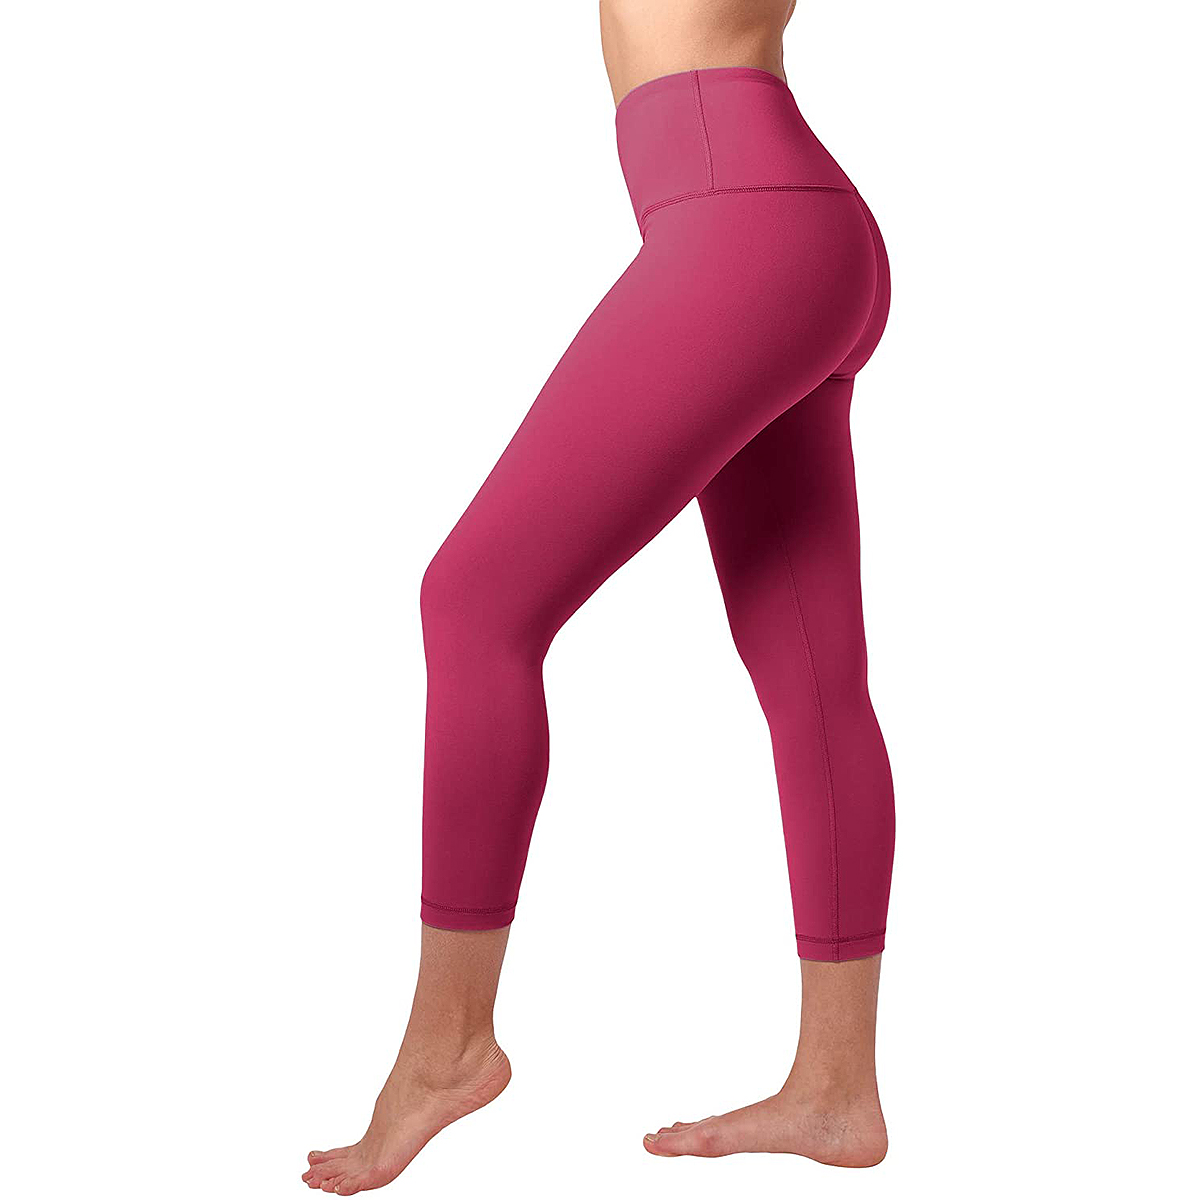 https://www.usmagazine.com/wp-content/uploads/2020/07/90-degree-by-reflex-capri-leggings-best-quality-leggings-on-amazon.jpg?w=1200&quality=86&strip=all